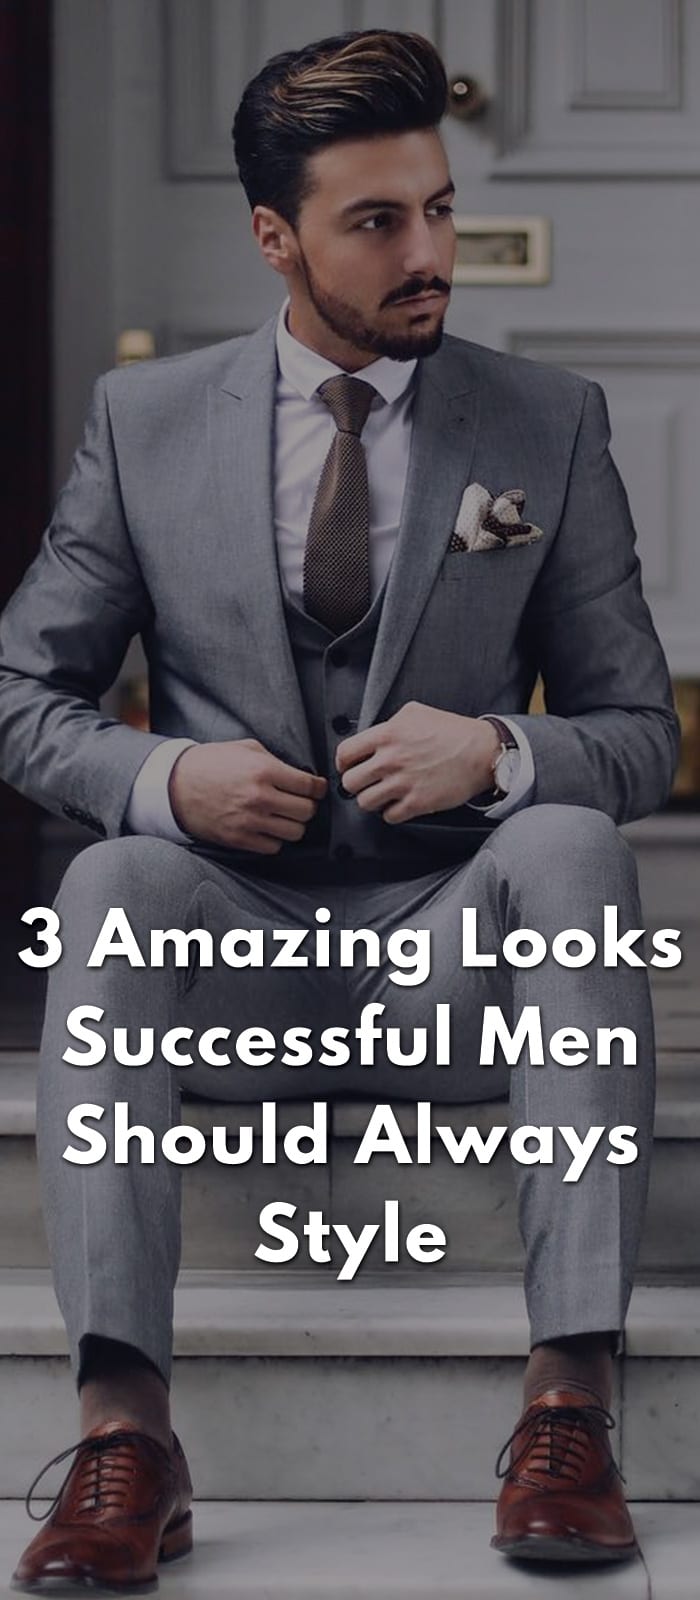 3 Amazing Looks Successful Men Should Always Style